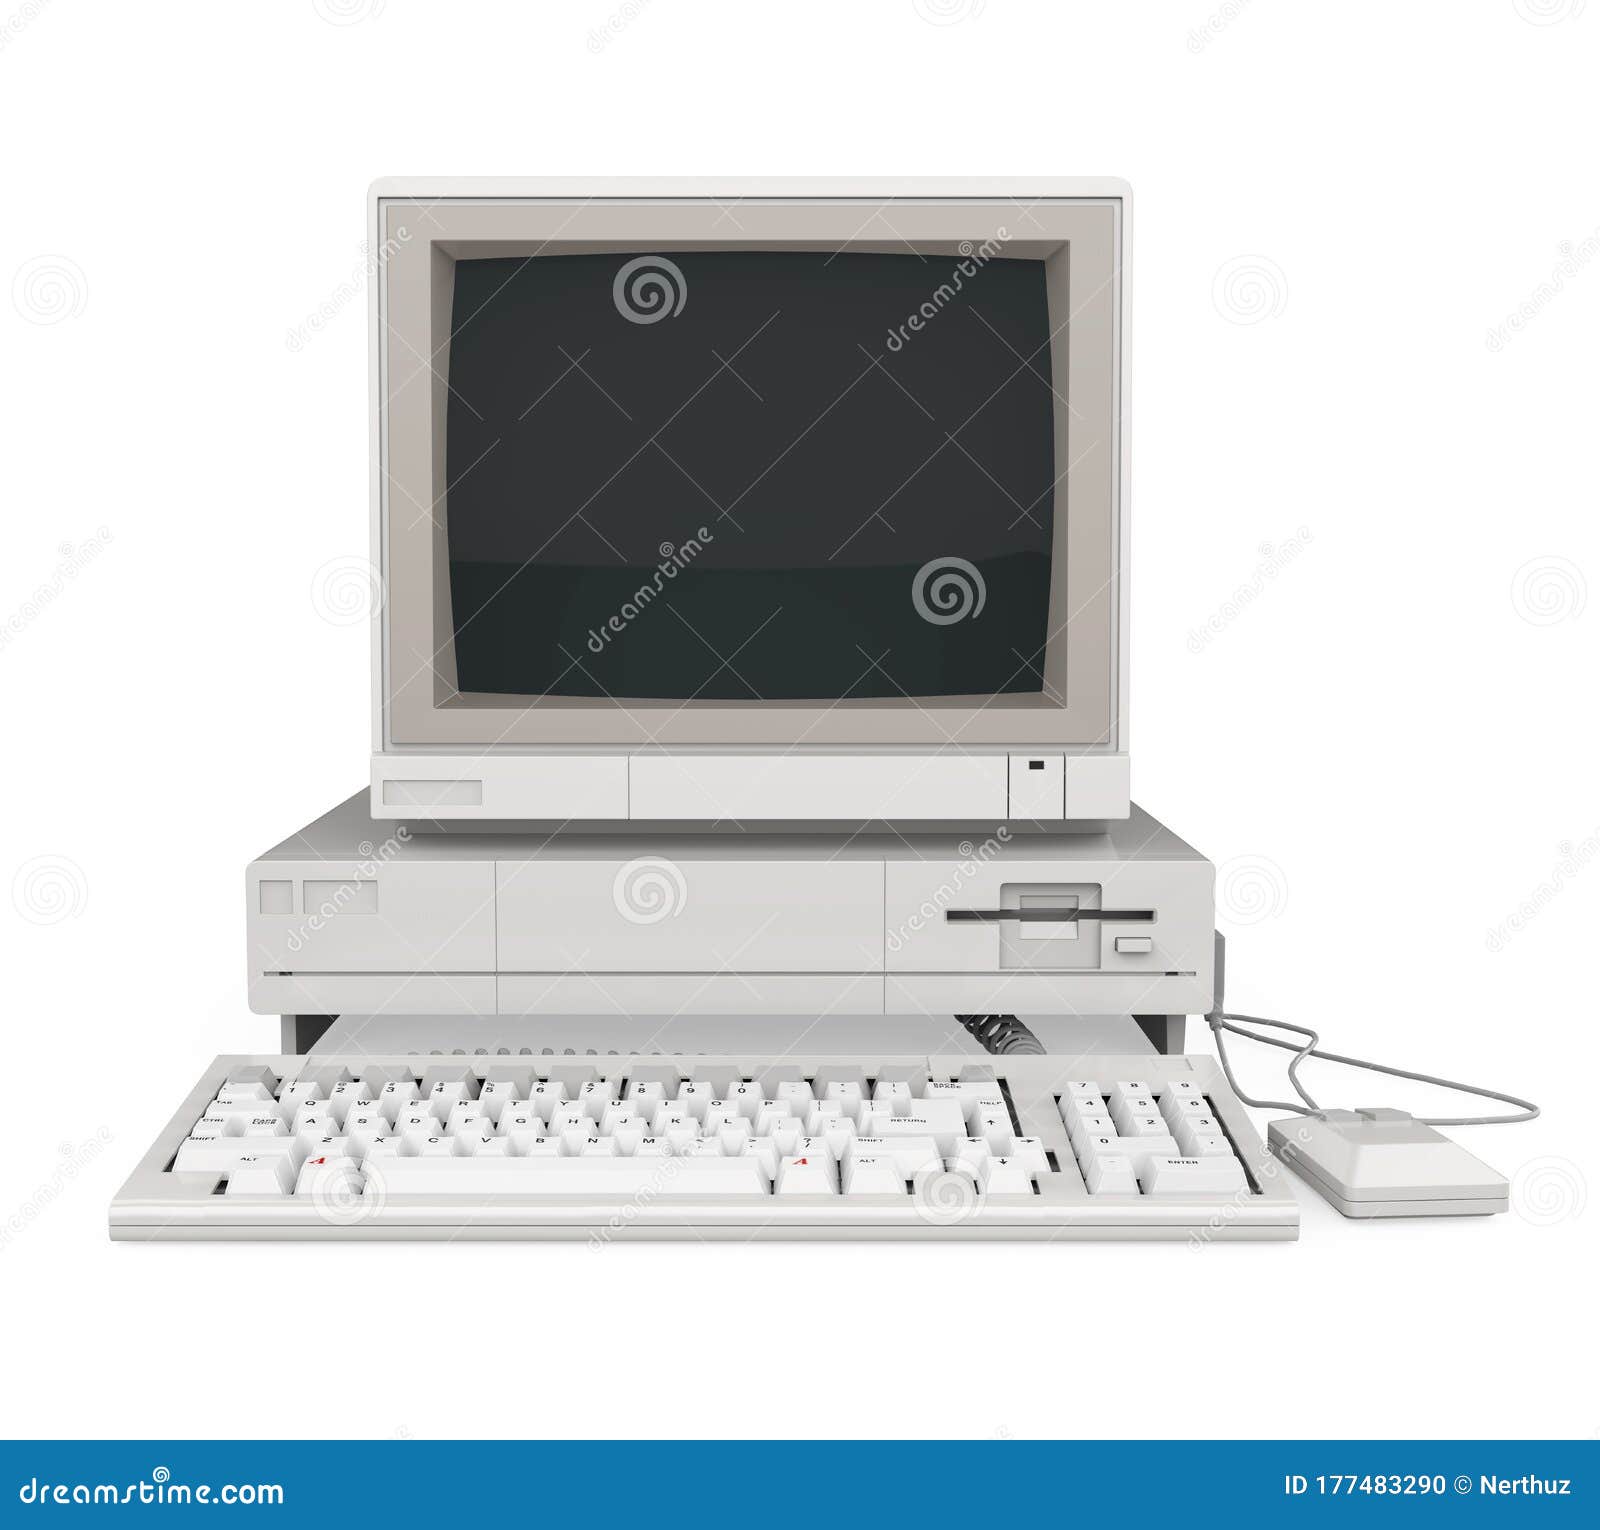 LCD Monitor And Keyboard Template Cartoon Vector | CartoonDealer.com